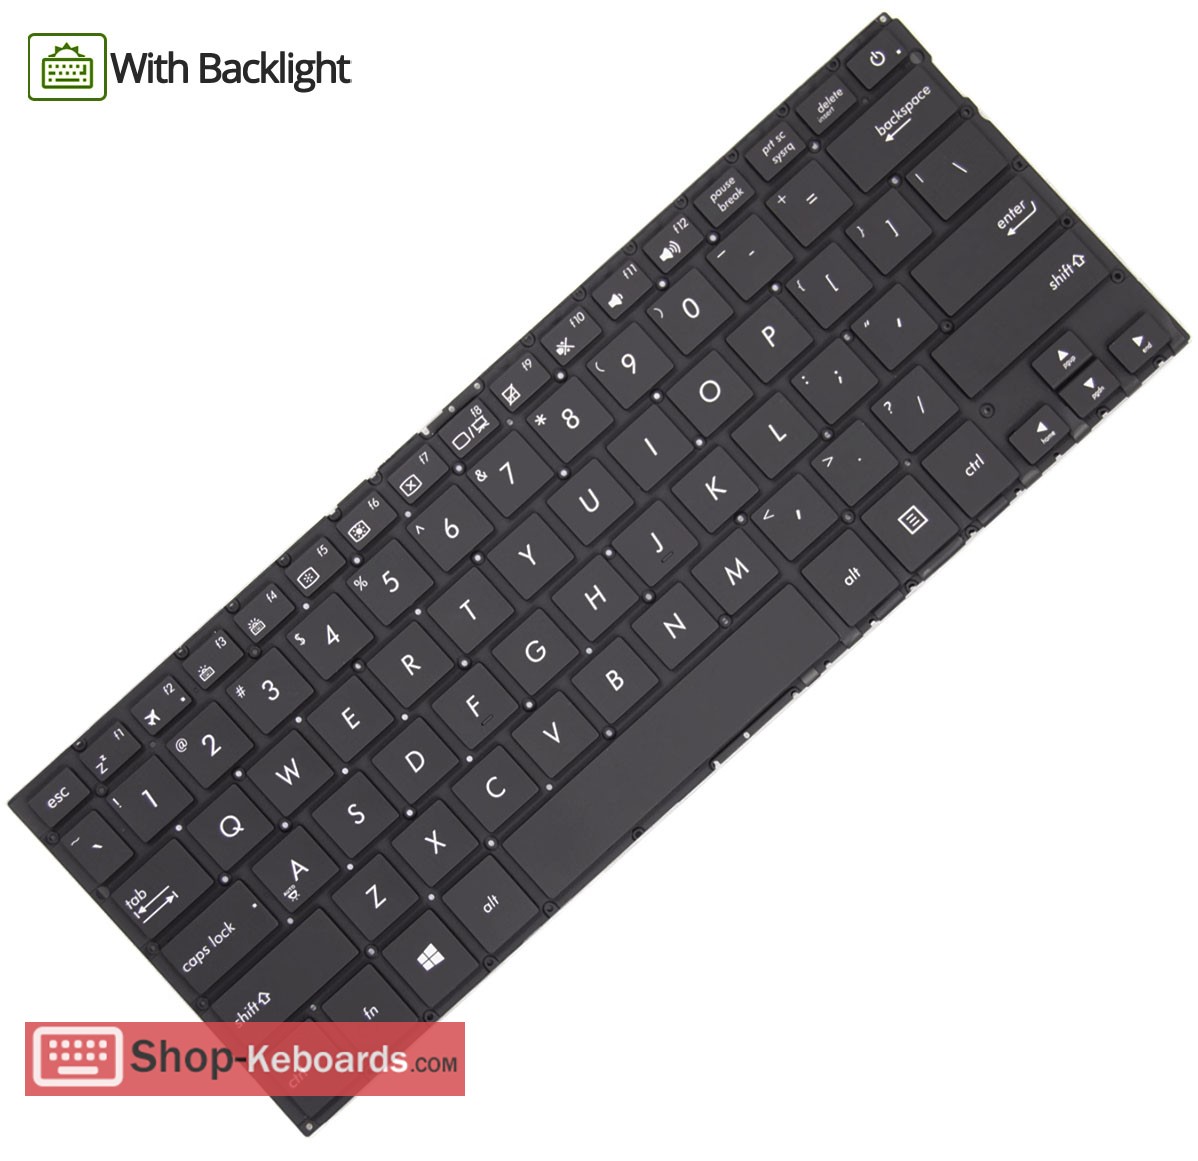 Asus 0KNB0-2627JP00 Keyboard replacement